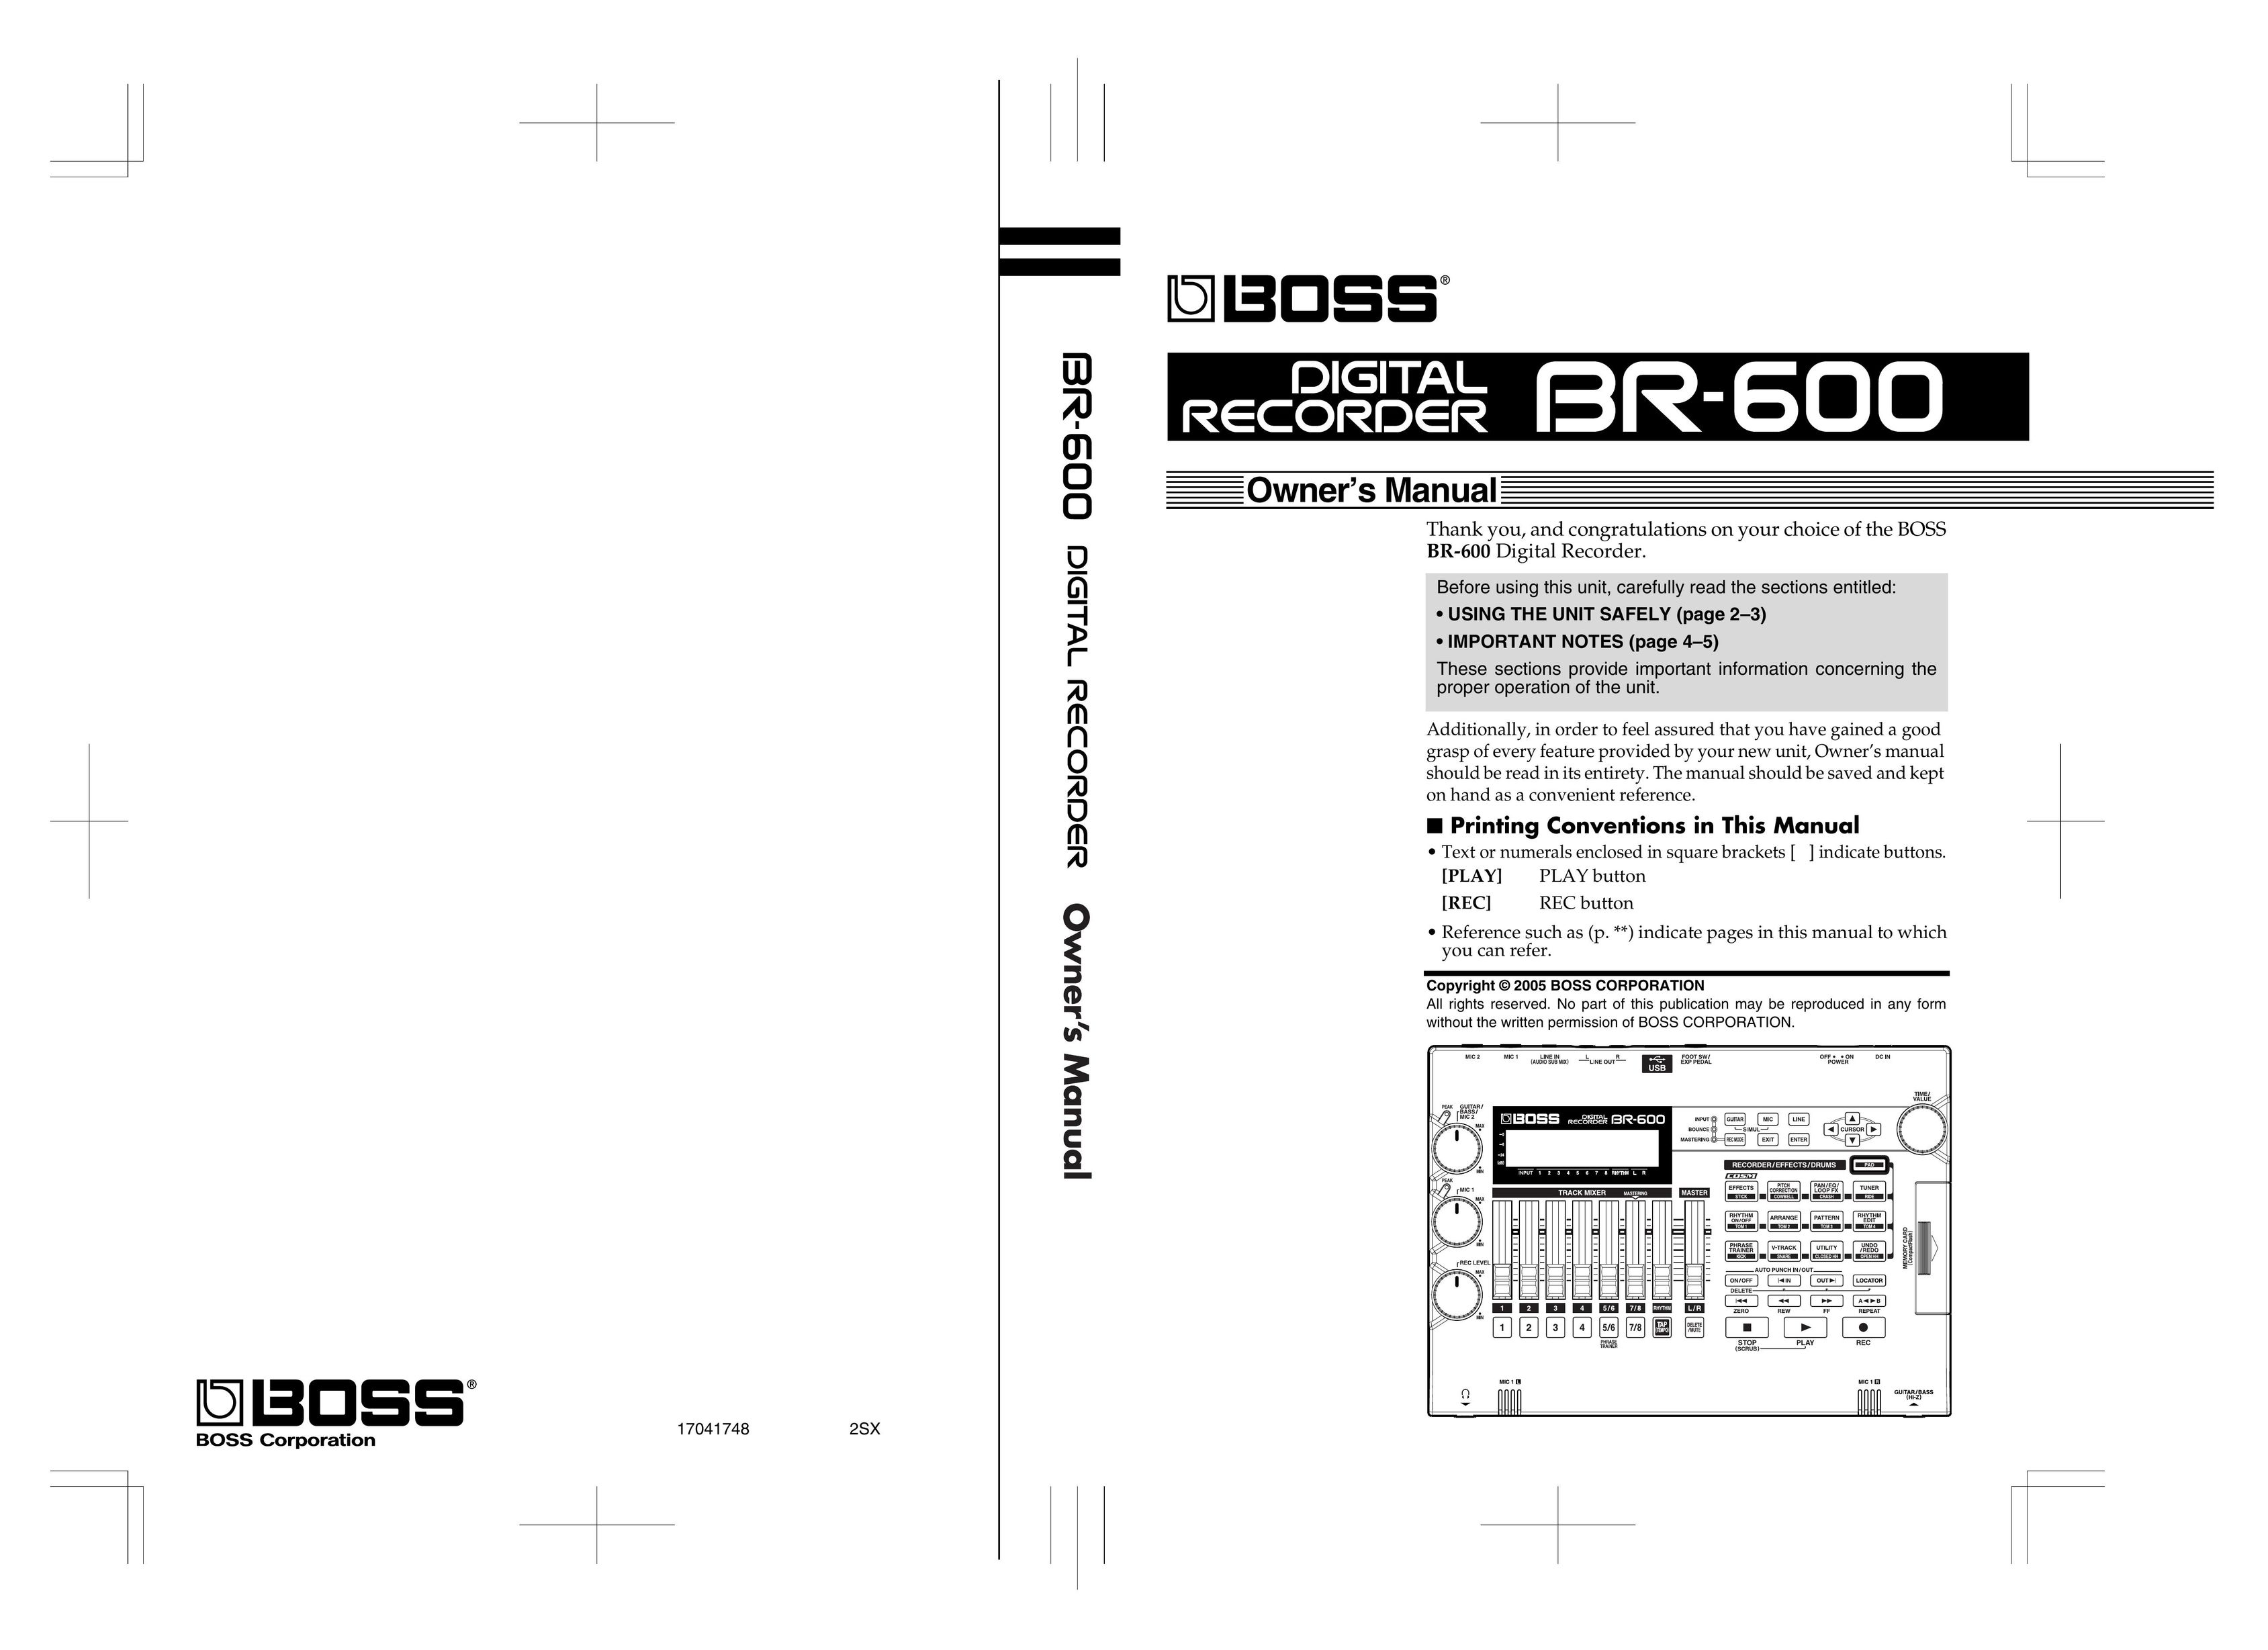 Roland BR-600 DVR User Manual